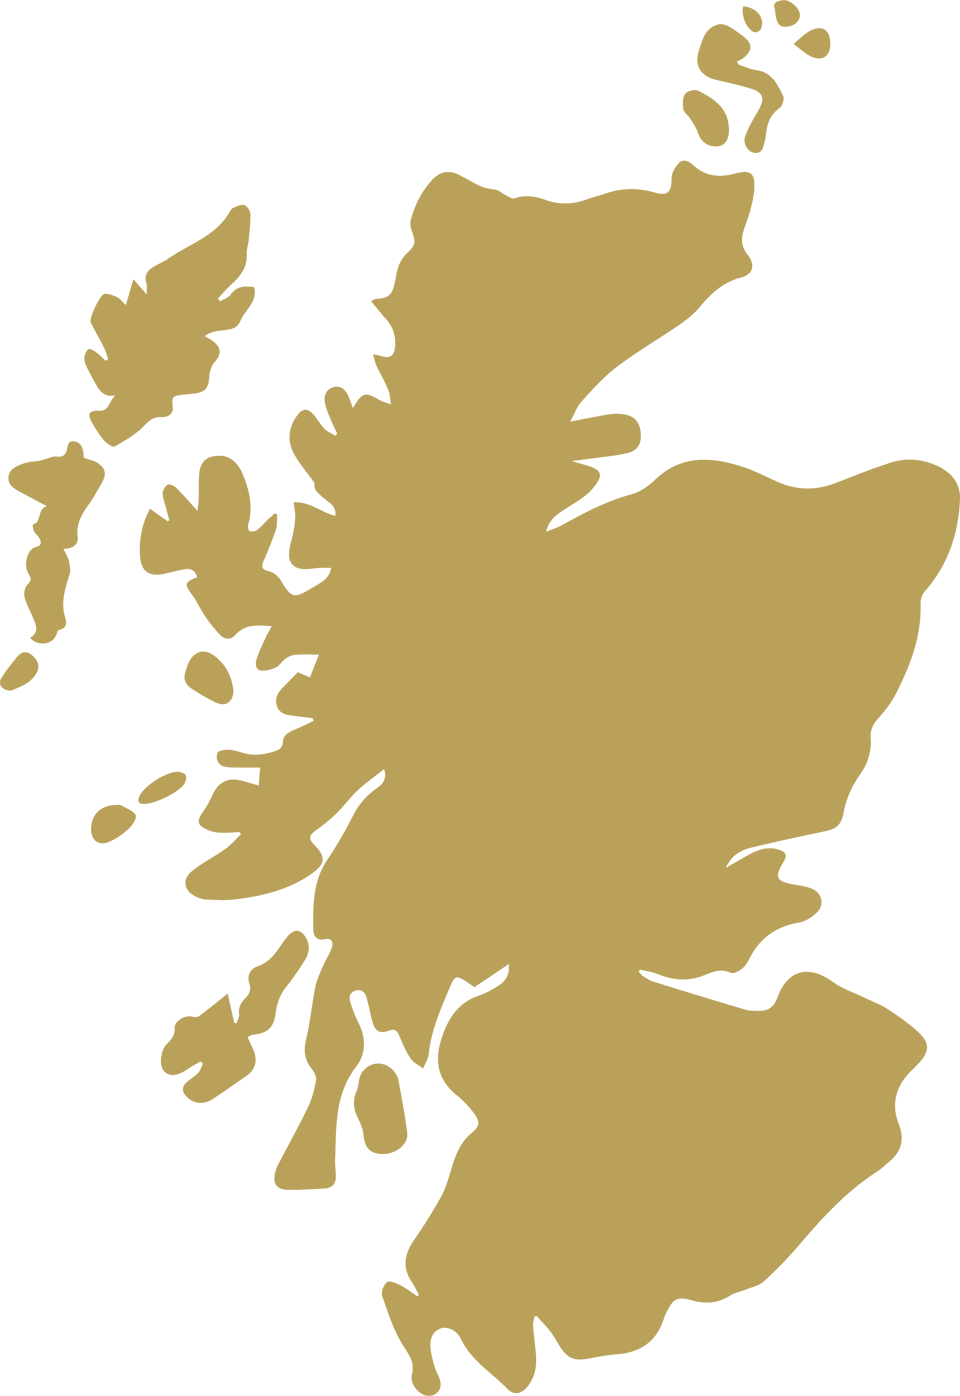 Outline map of Scotland